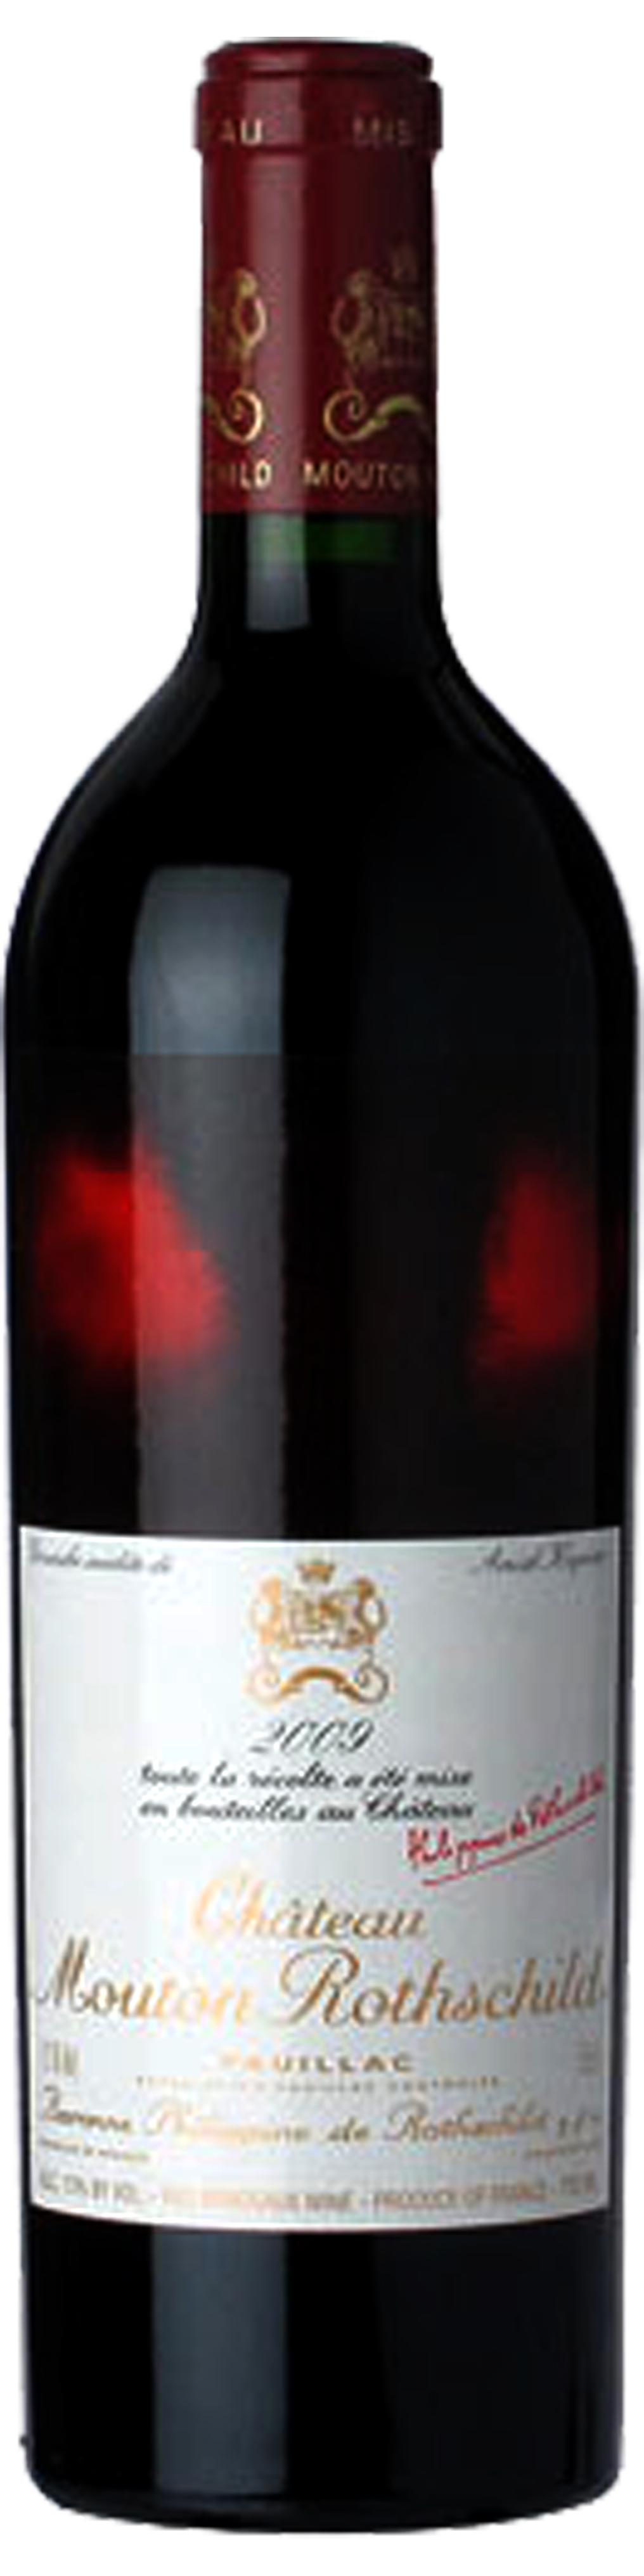 Bottle shot of 2009 Château Mouton Rothschild, 1er Cru Pauillac